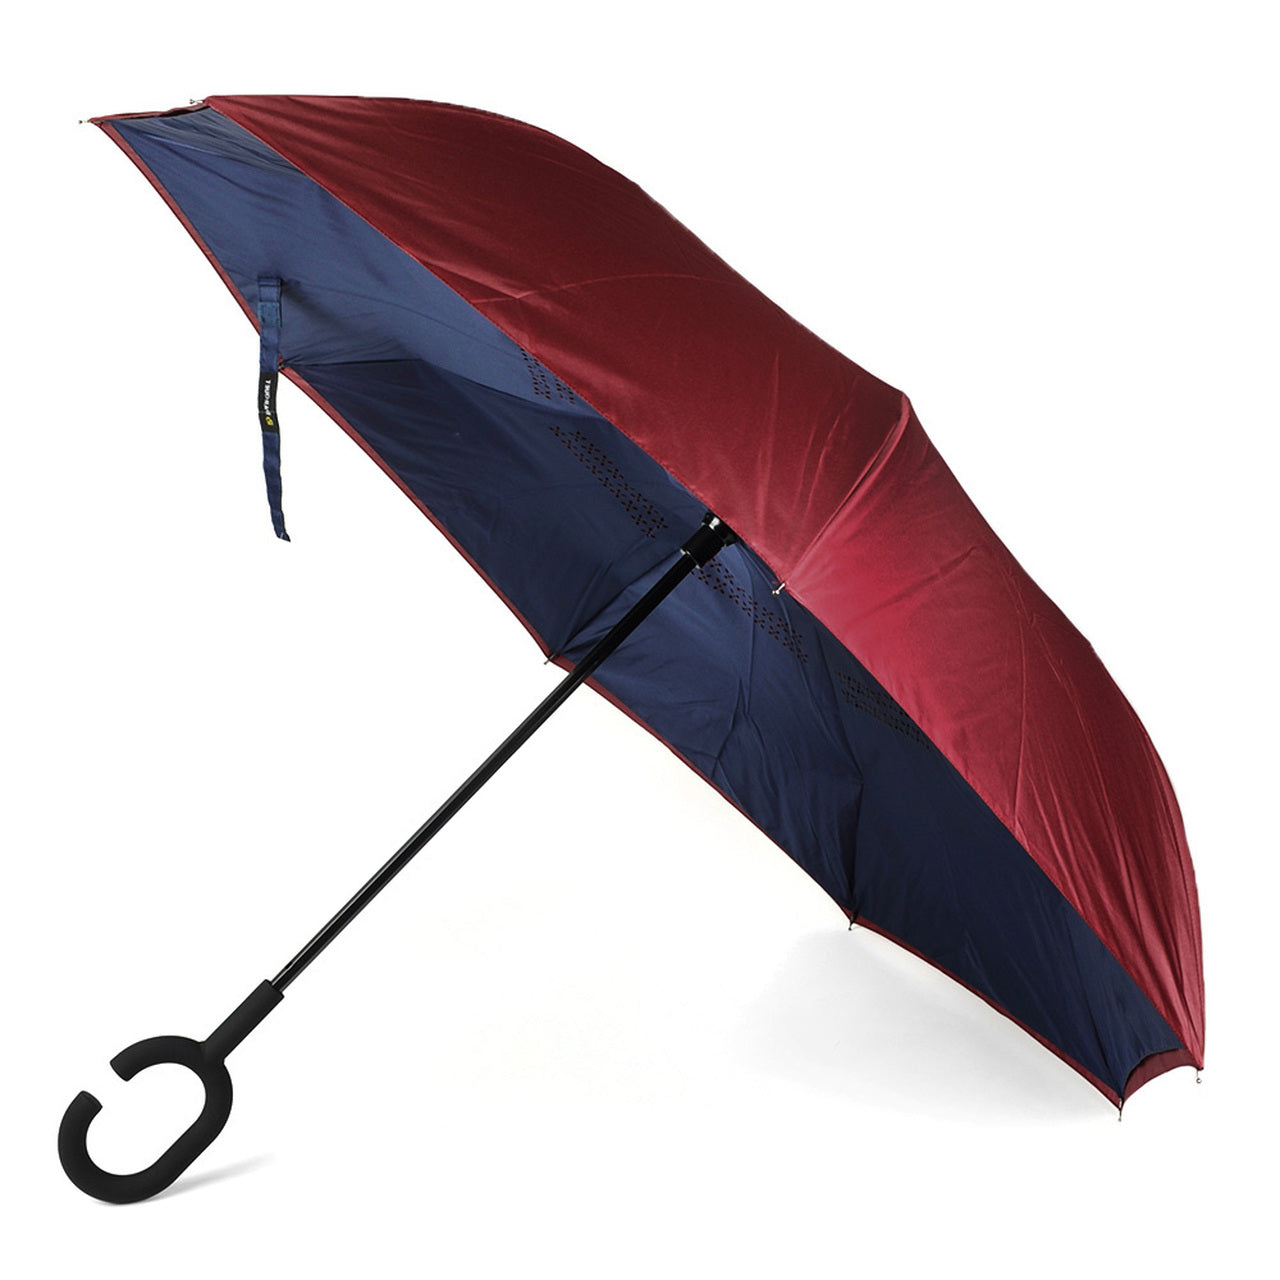 Selini Double Layer School Pride Inverted Umbrella - Burgundy/Navy